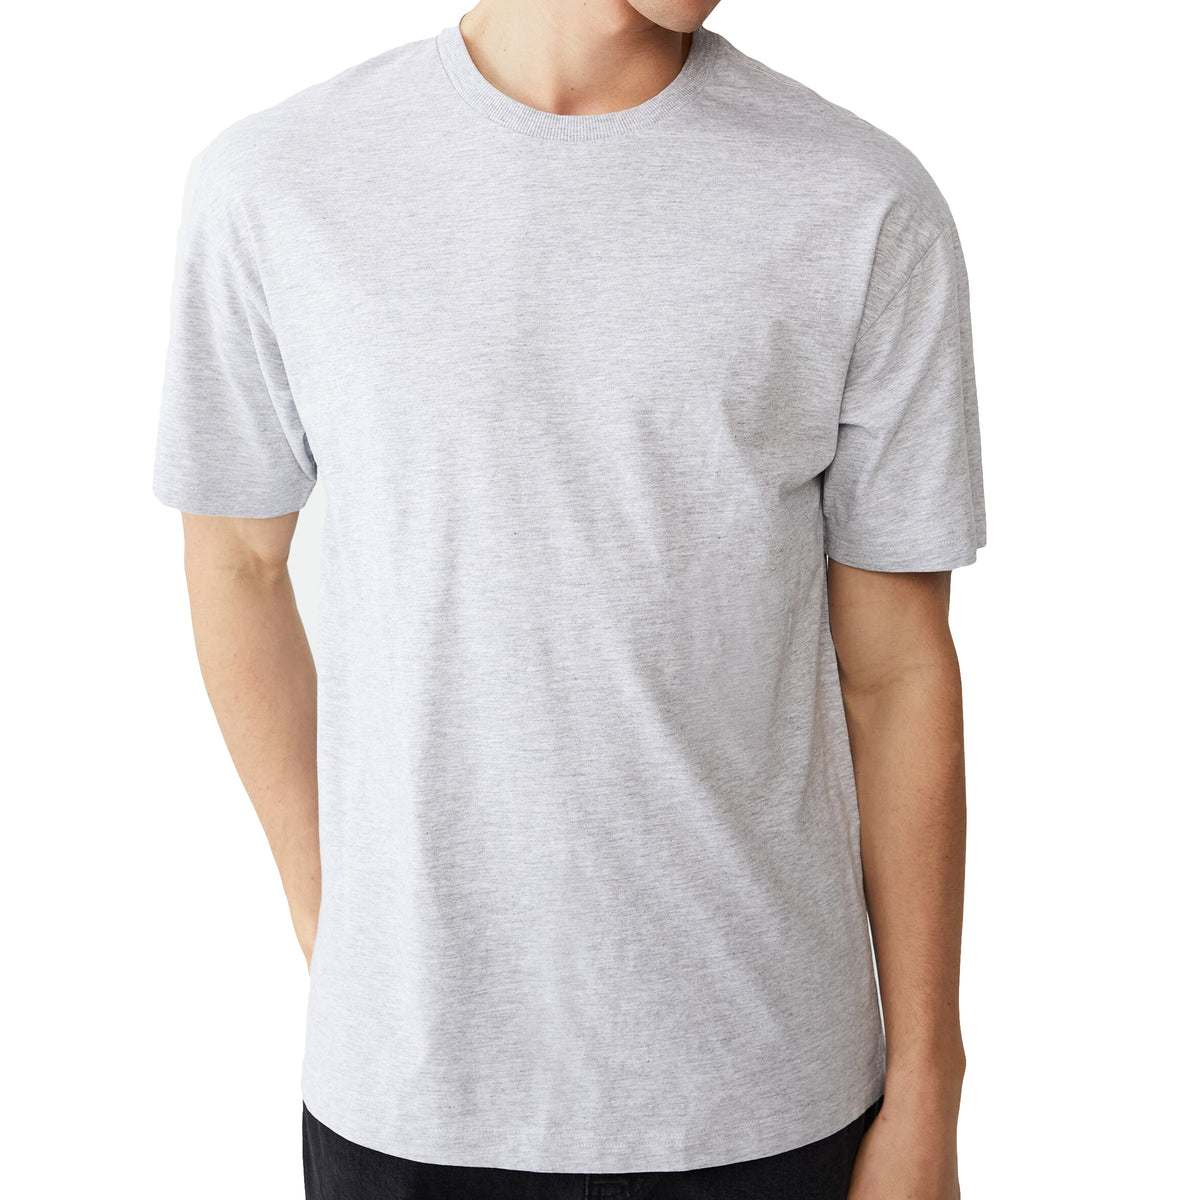 Adult 100% Cotton T-Shirt Unisex Men's Basic Plain Blank Crew Tee Tops Shirts, White, M